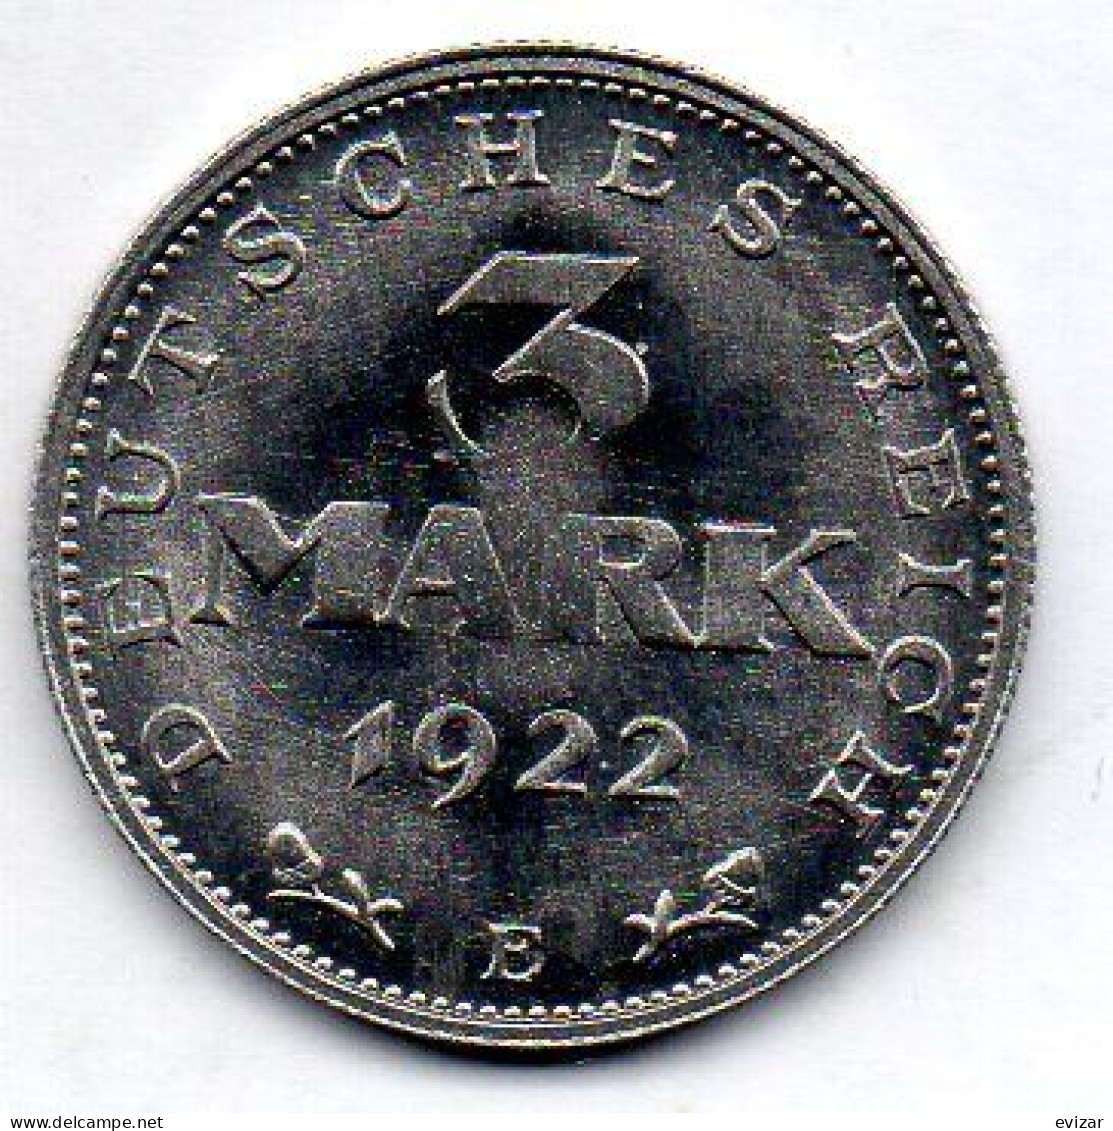 GERMANY - WEIMAR REPUBLIC, 3 Mark, Aluminum, Year 1922-E, KM # 29 - 3 Mark & 3 Reichsmark